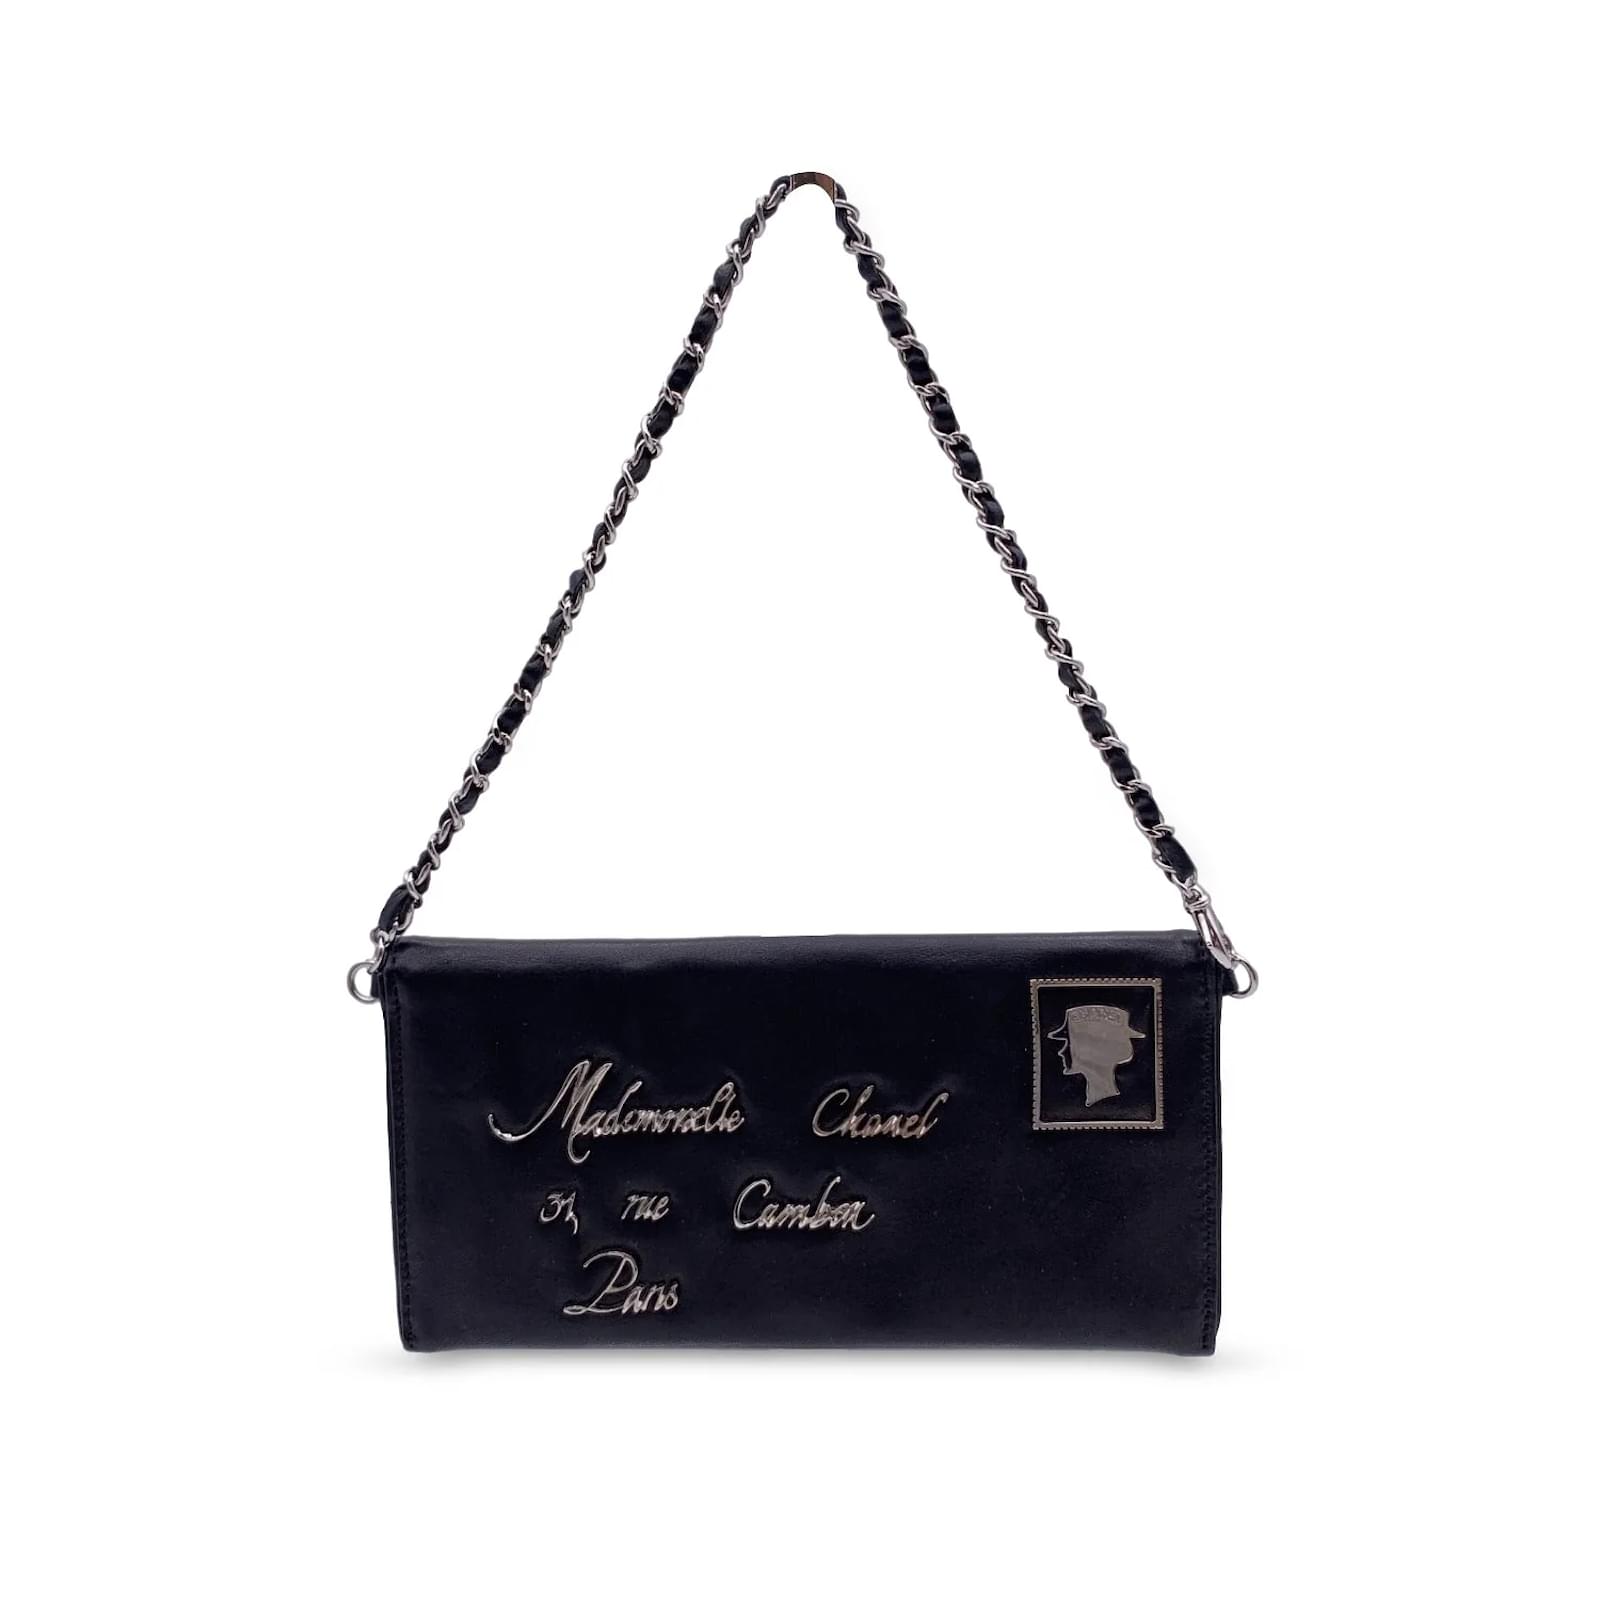 Chanel Tote Shoulder Bag Black Caviar Leather Entrupy Authentic 1